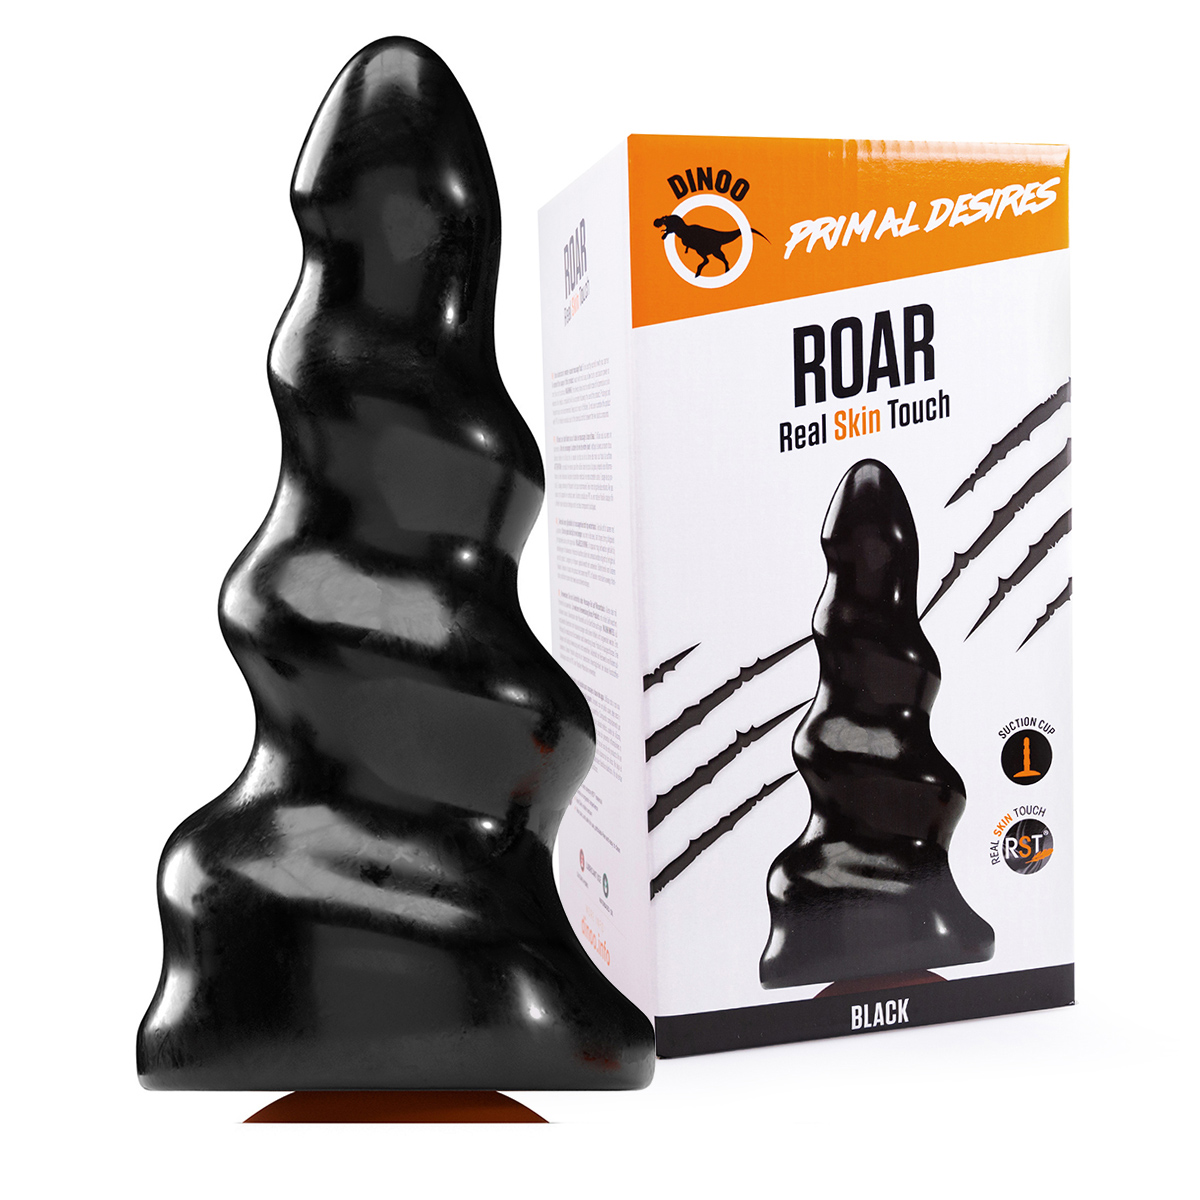 DINOO PRIMAL - Roar Black